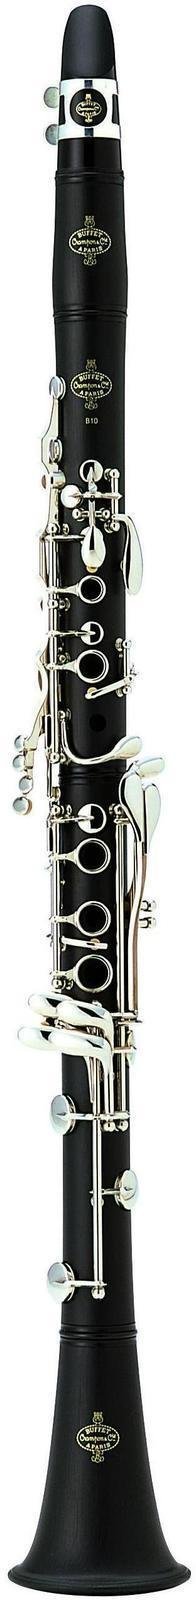 Bb Clarinet Buffet Crampon B10